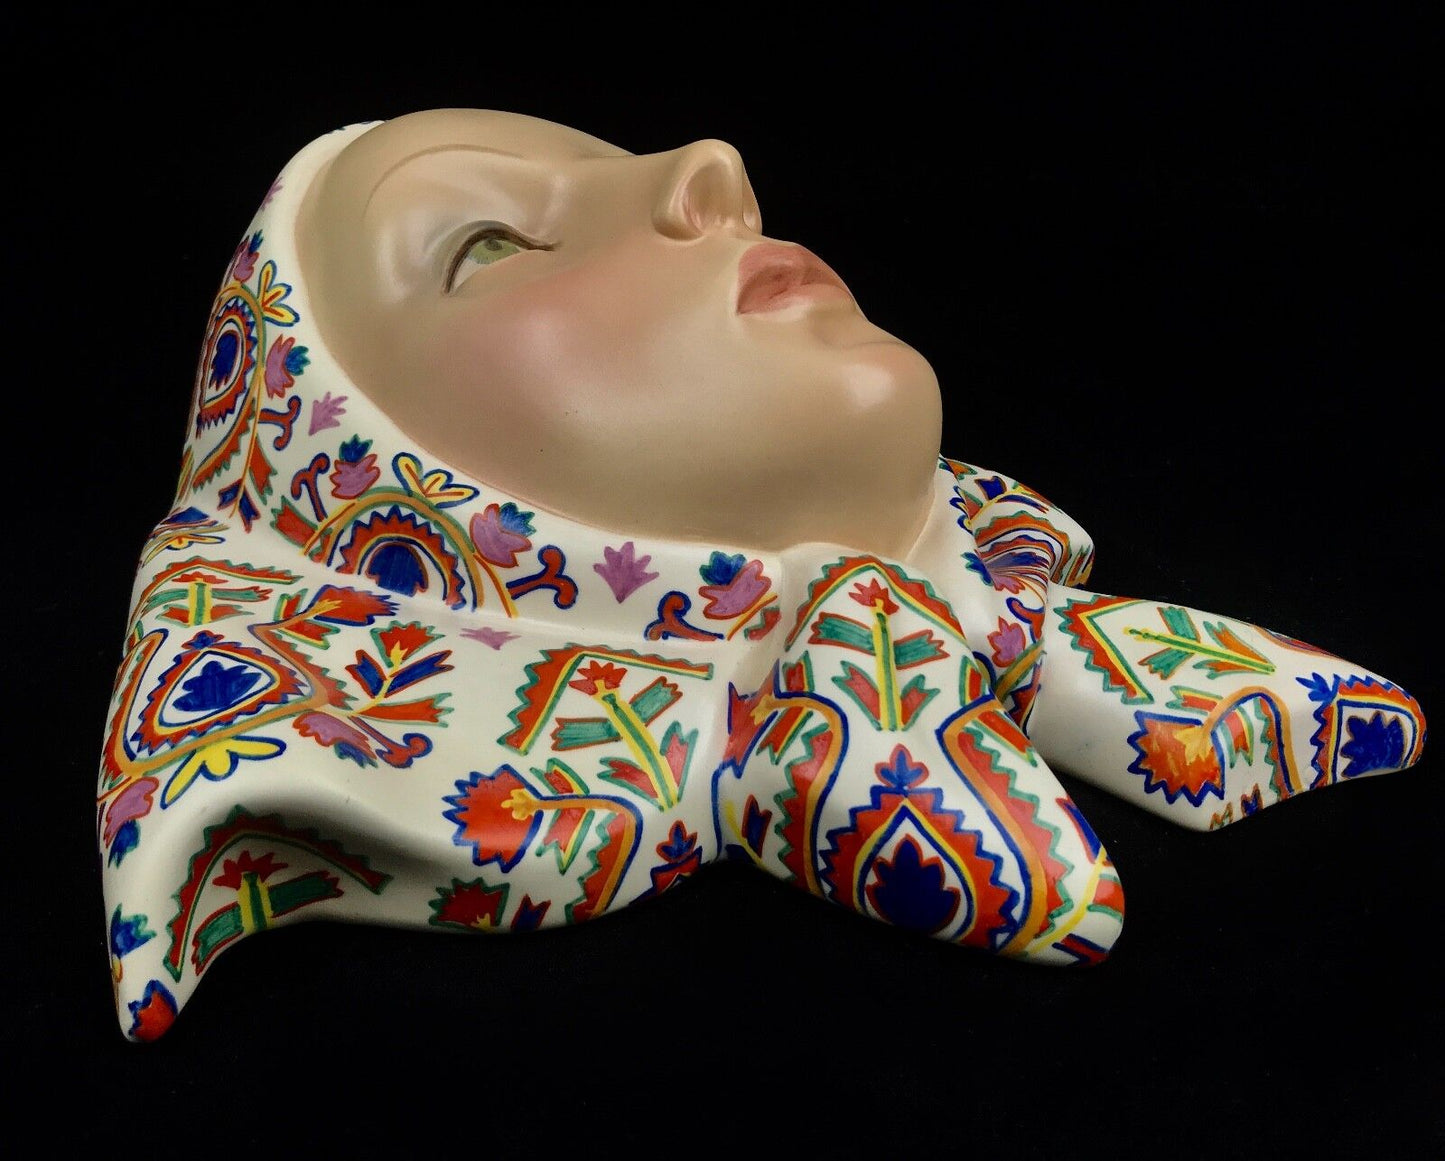 Art Deco Ceramic Mask By Helen Konig Scavini For Lenci Pottery / Italian Antique